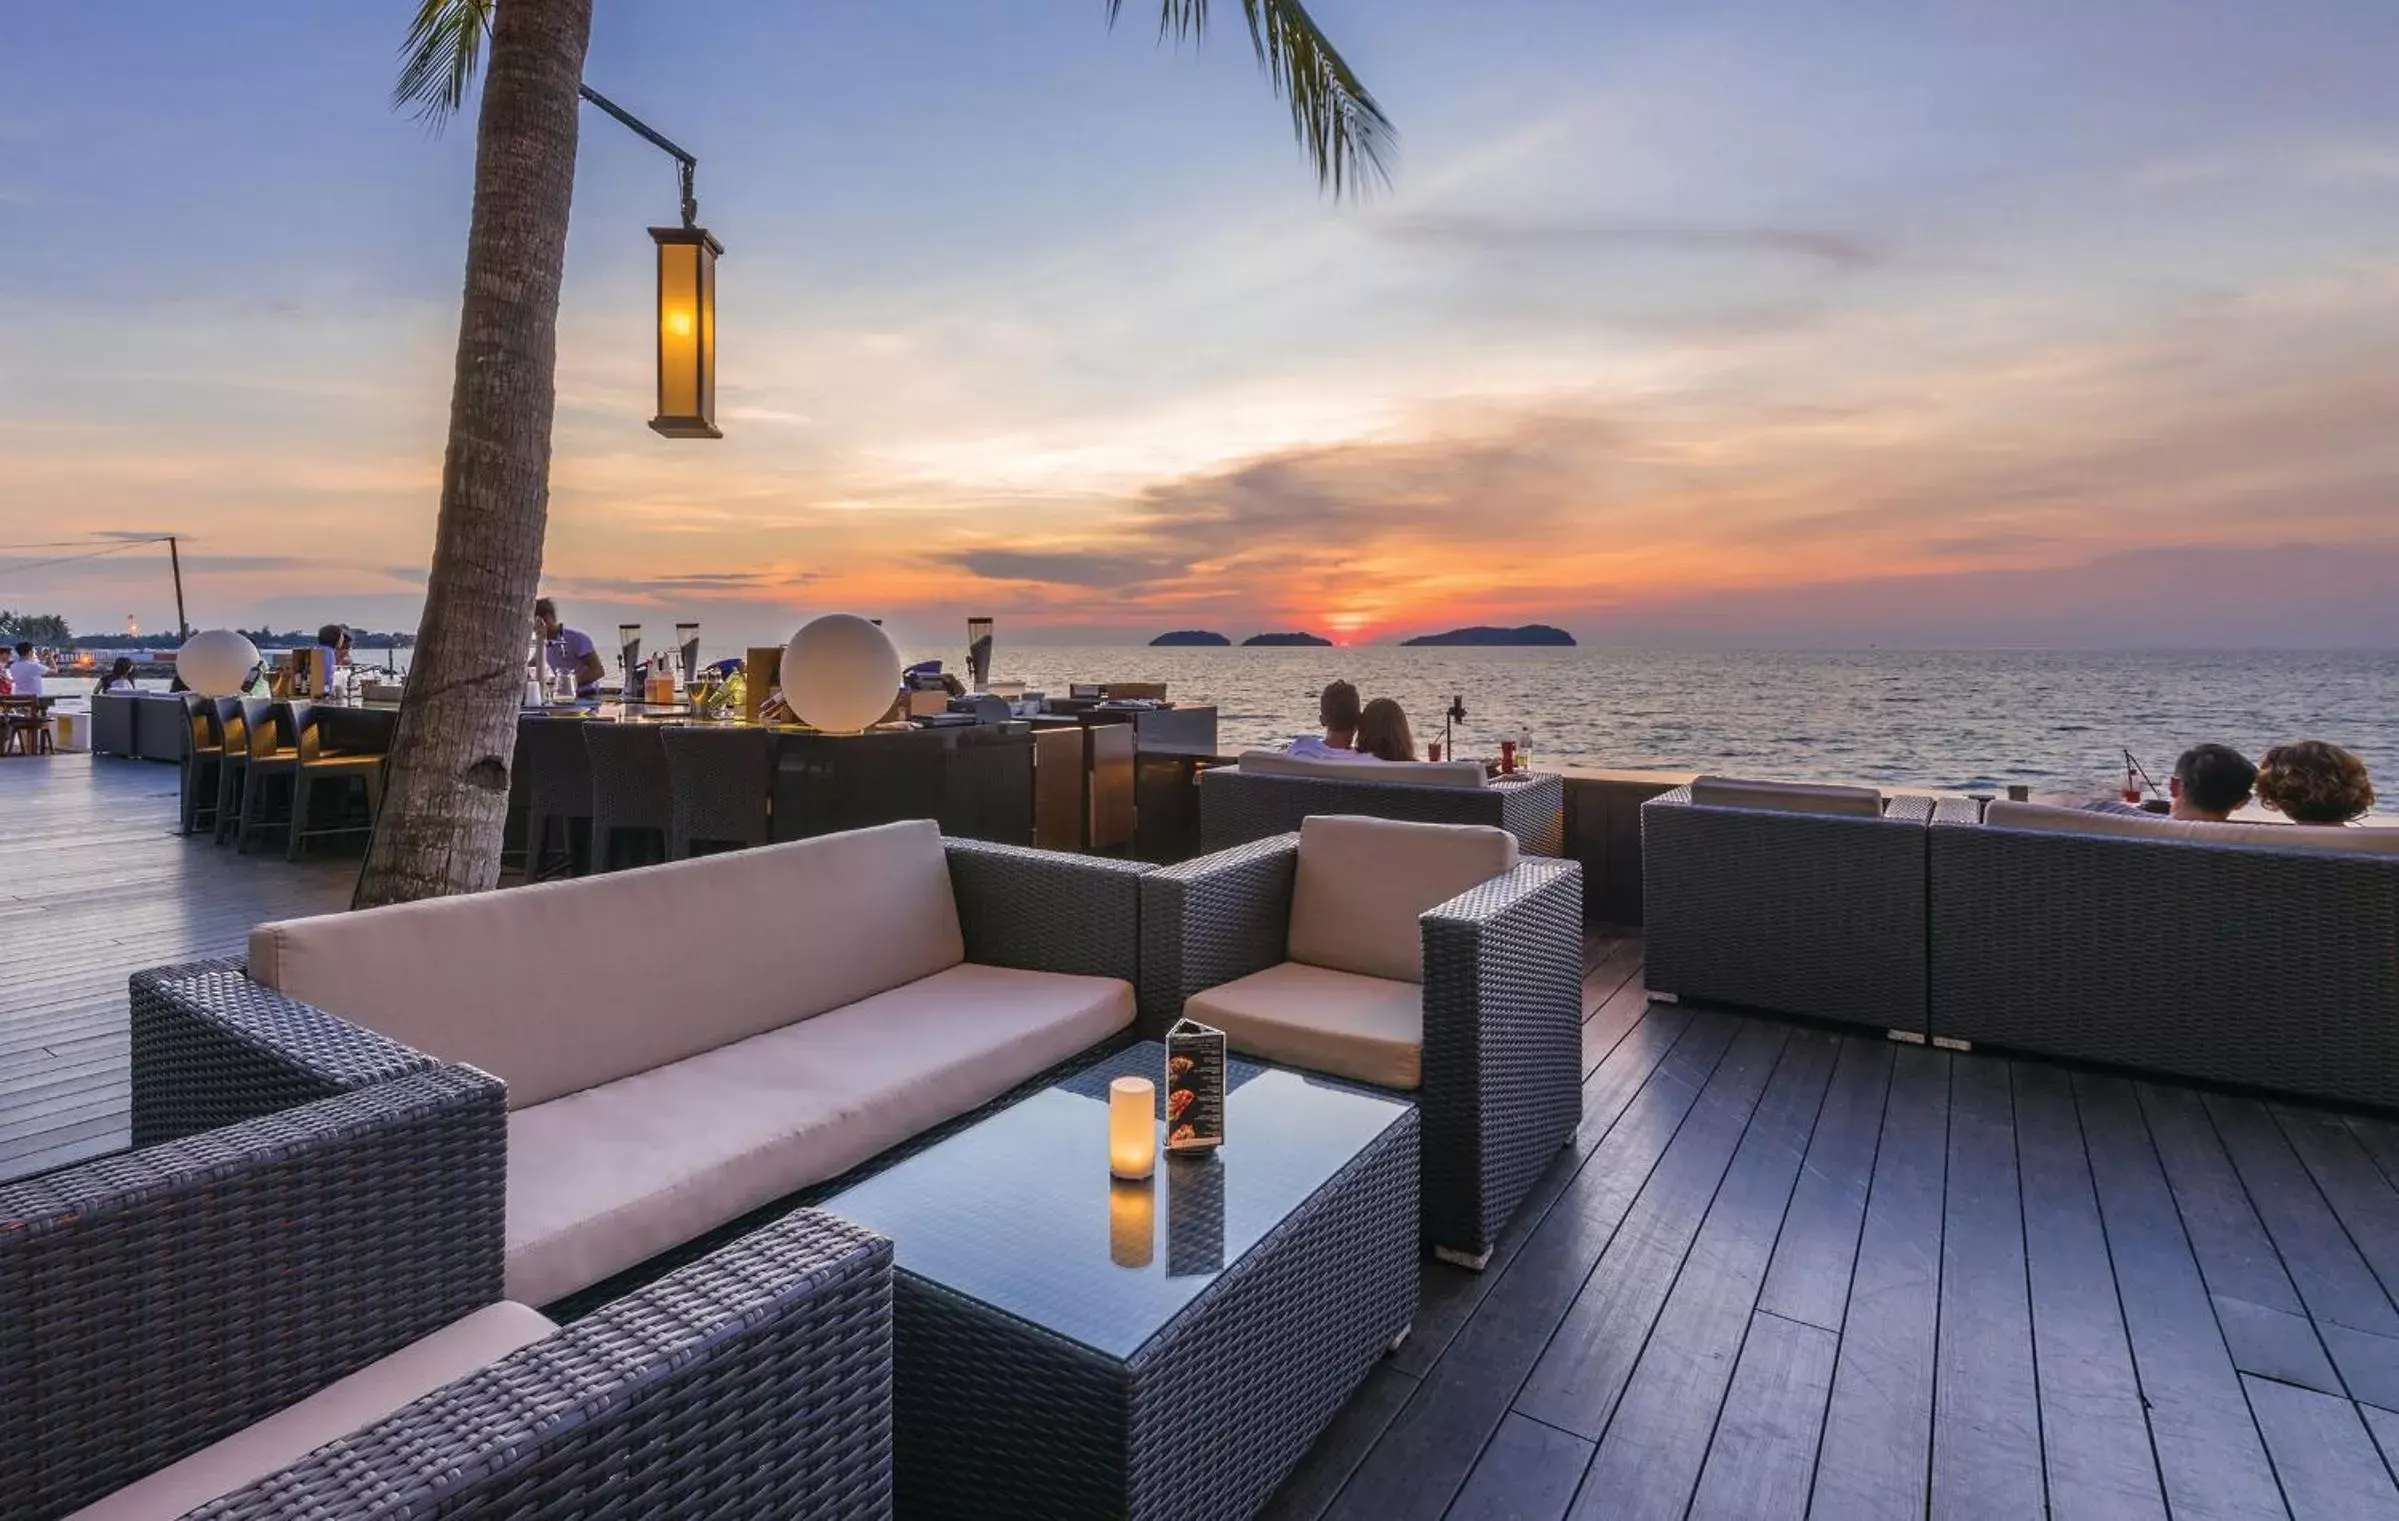 Restaurant/places to eat, Sunrise/Sunset in The Magellan Sutera Resort